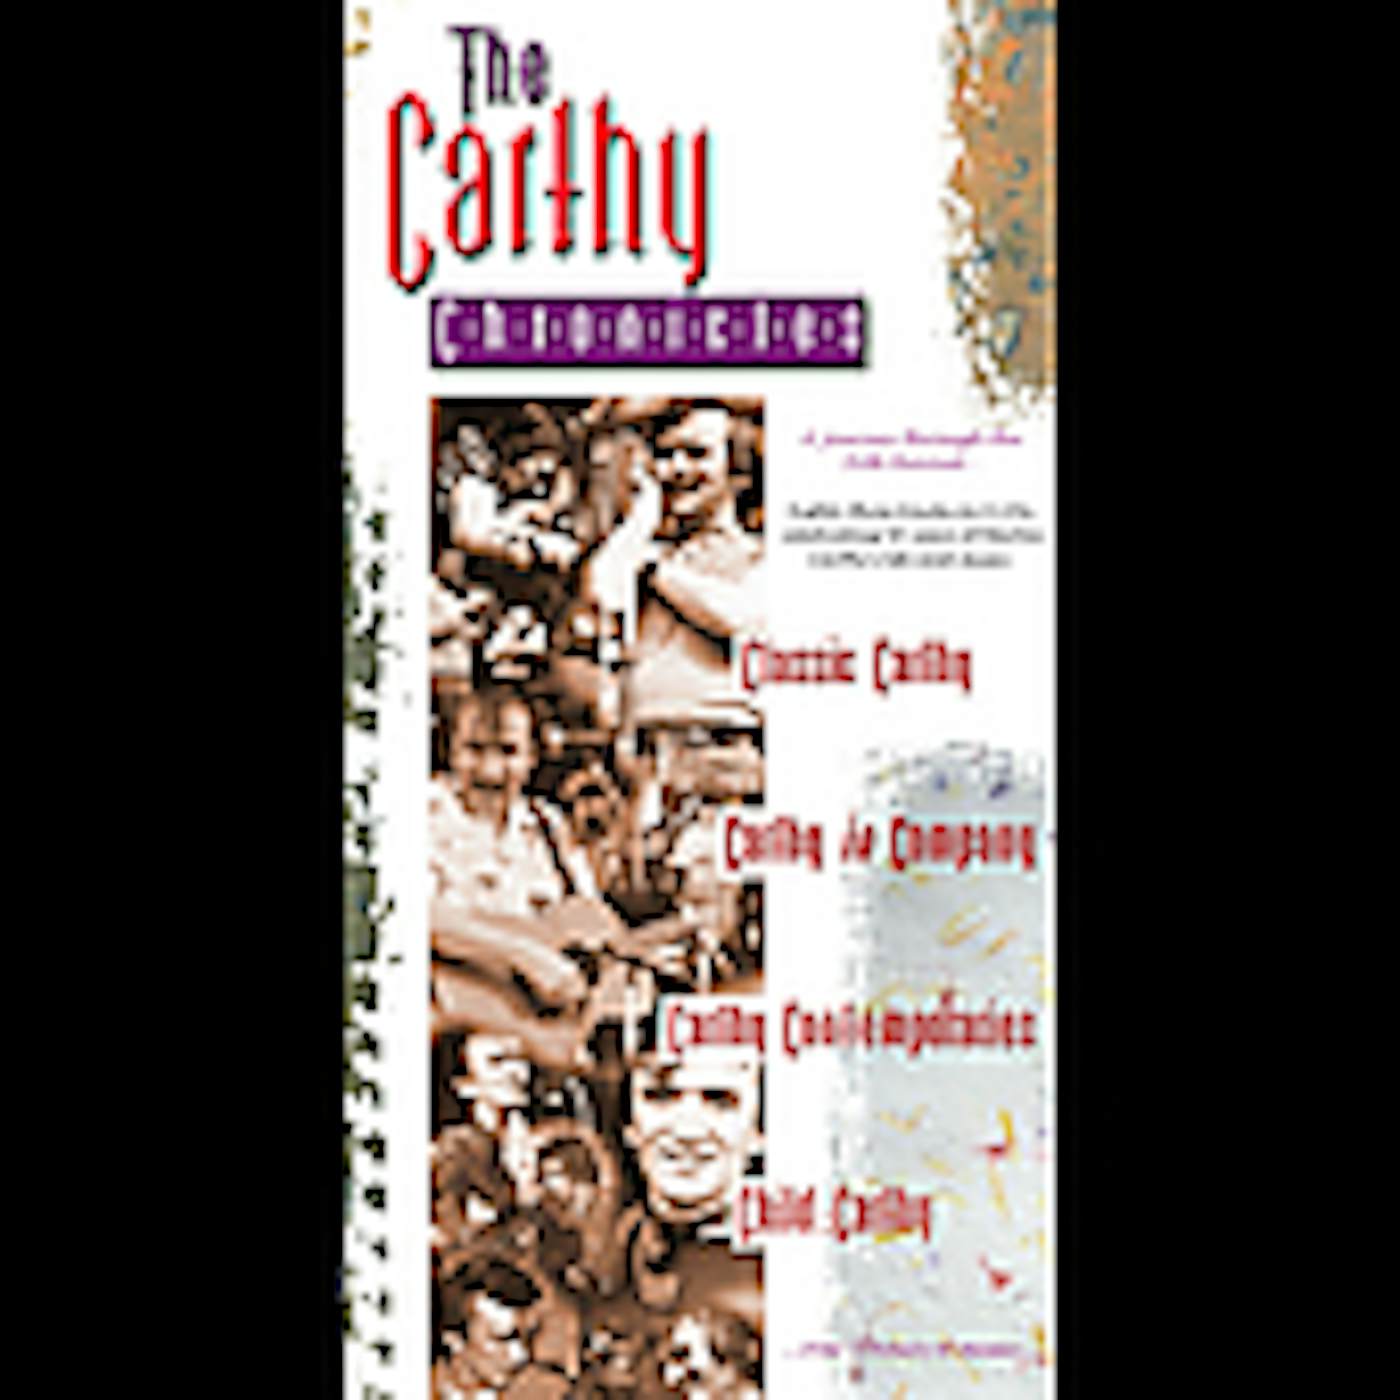 Martin Carthy CARTHY CHRONICLES: A JOURNEY THROUGH FOLK REVIVAL CD